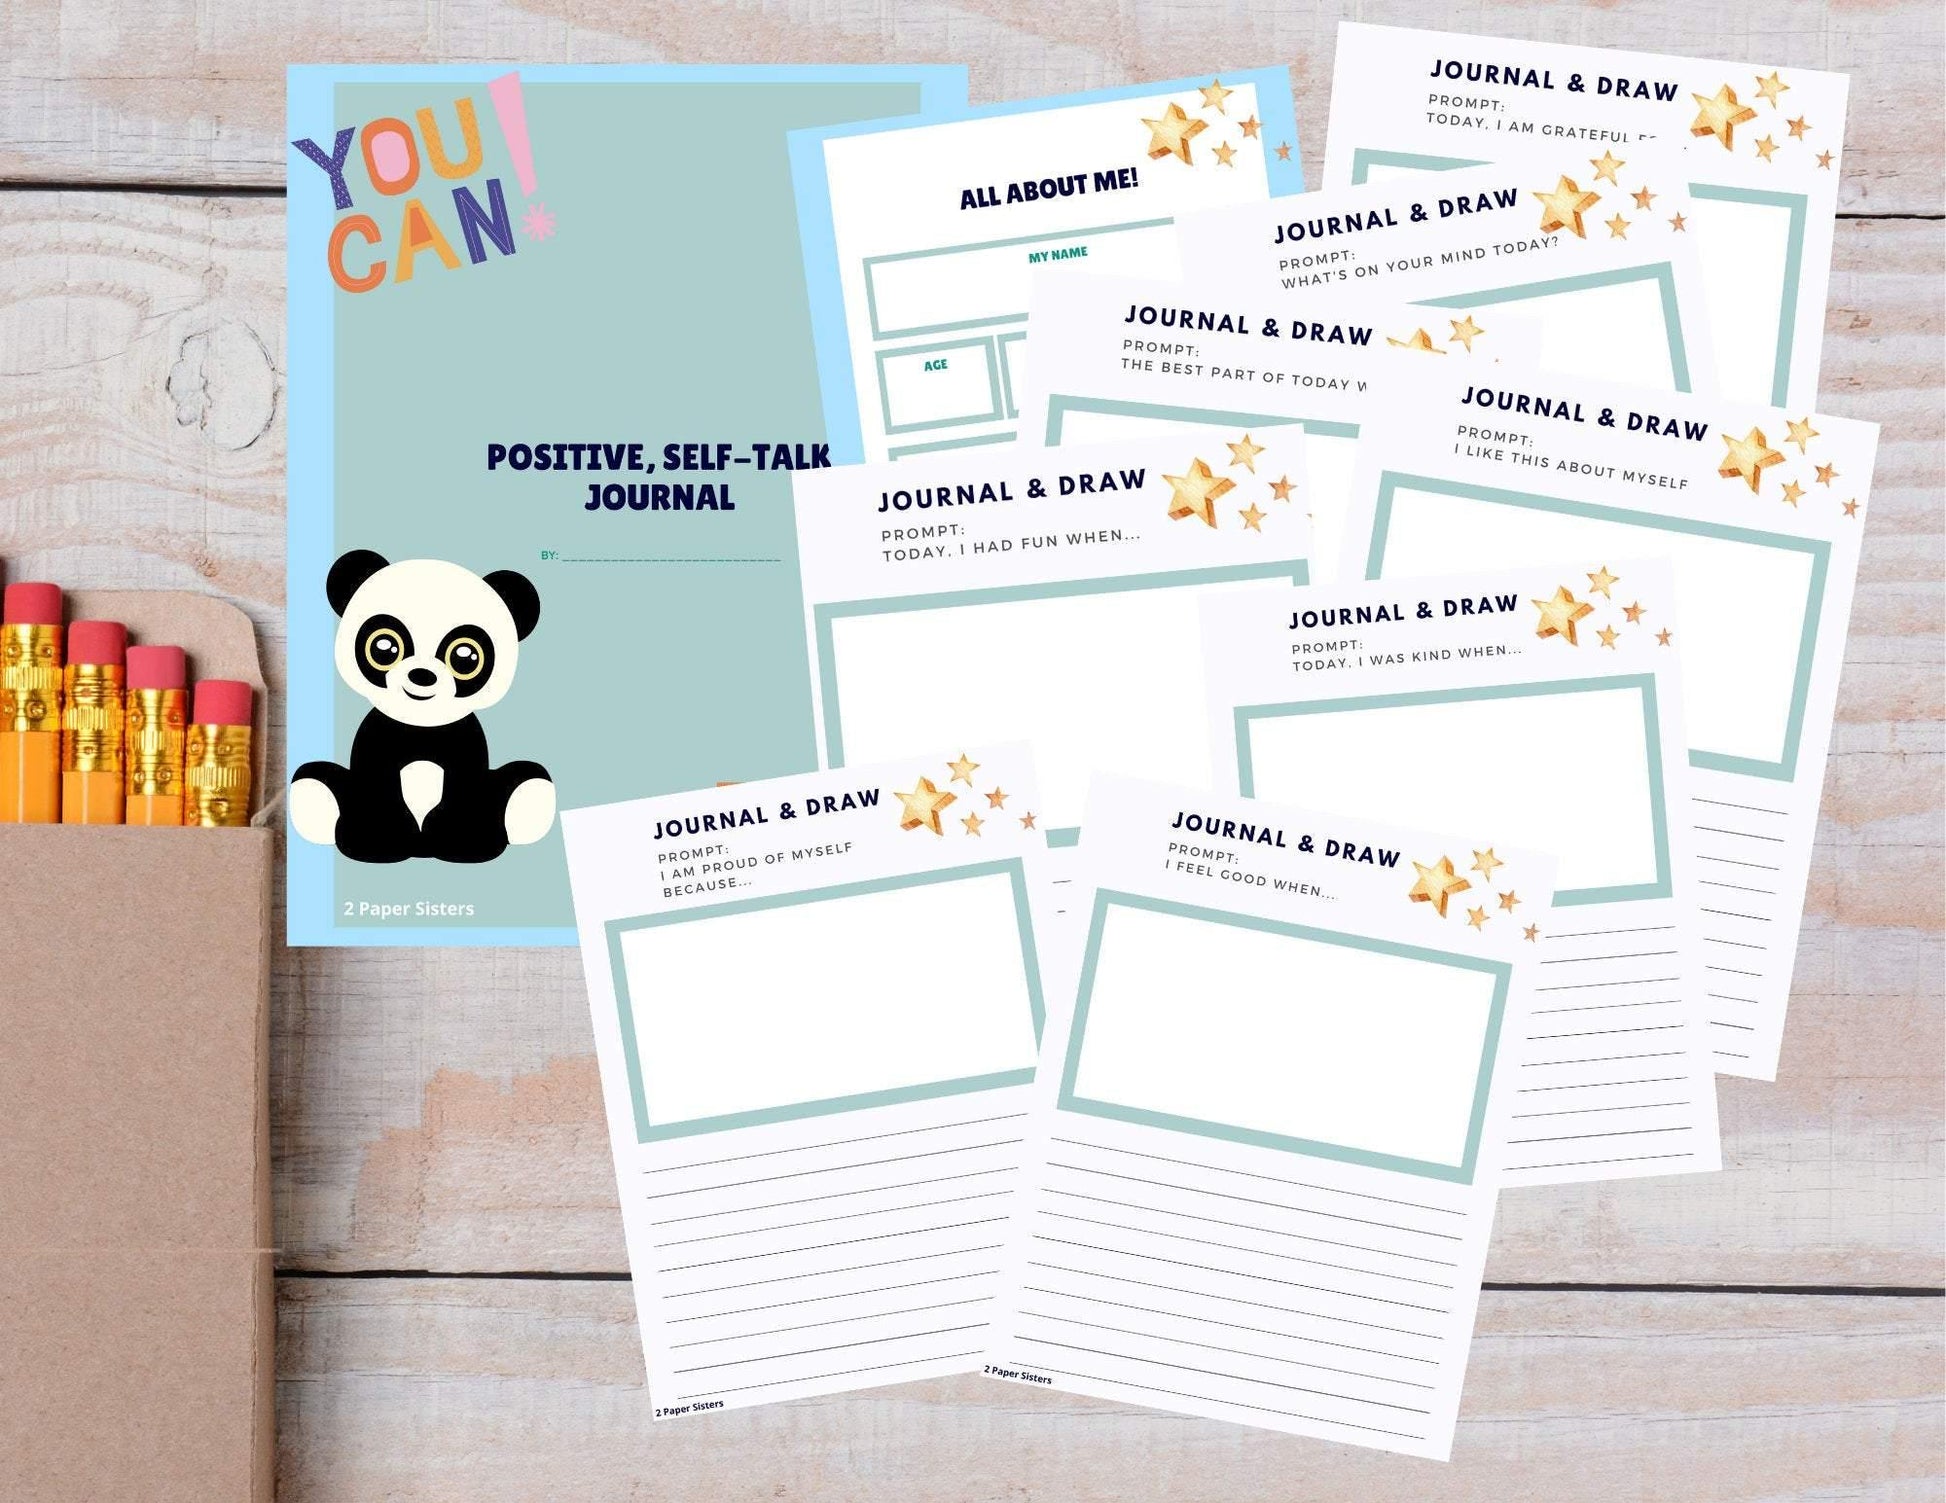 Panda Positive Affirmation Journal, Ages 6-8 - Digital Download - 2 Paper Sisters